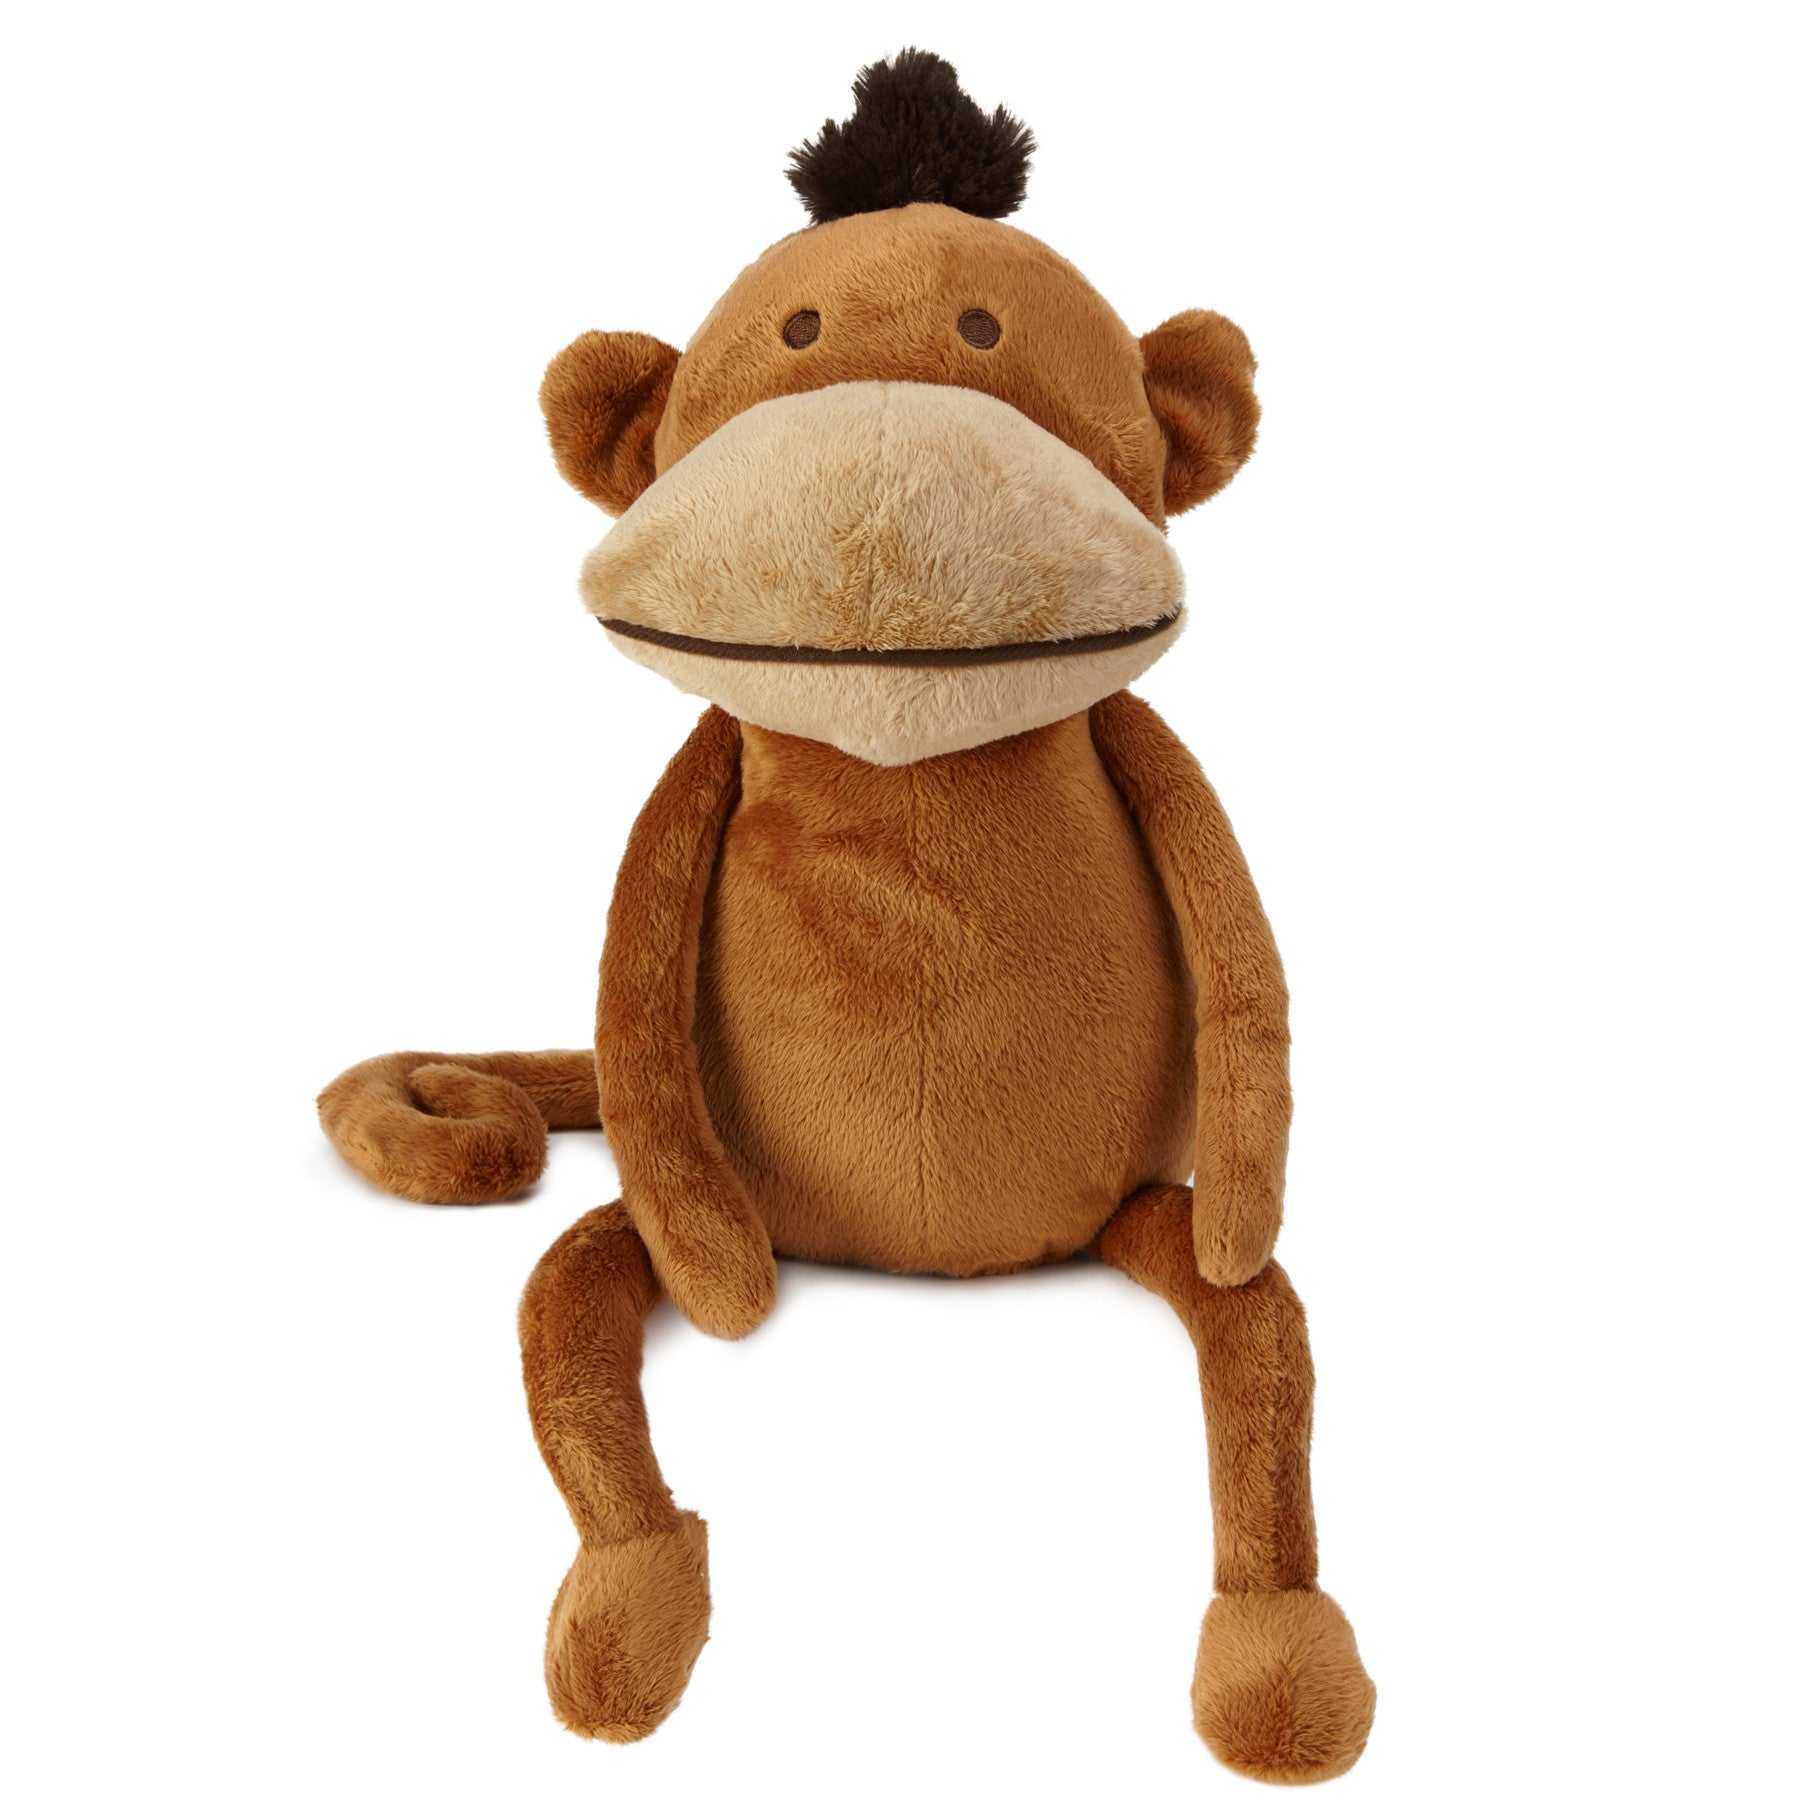 a stuffed monkey